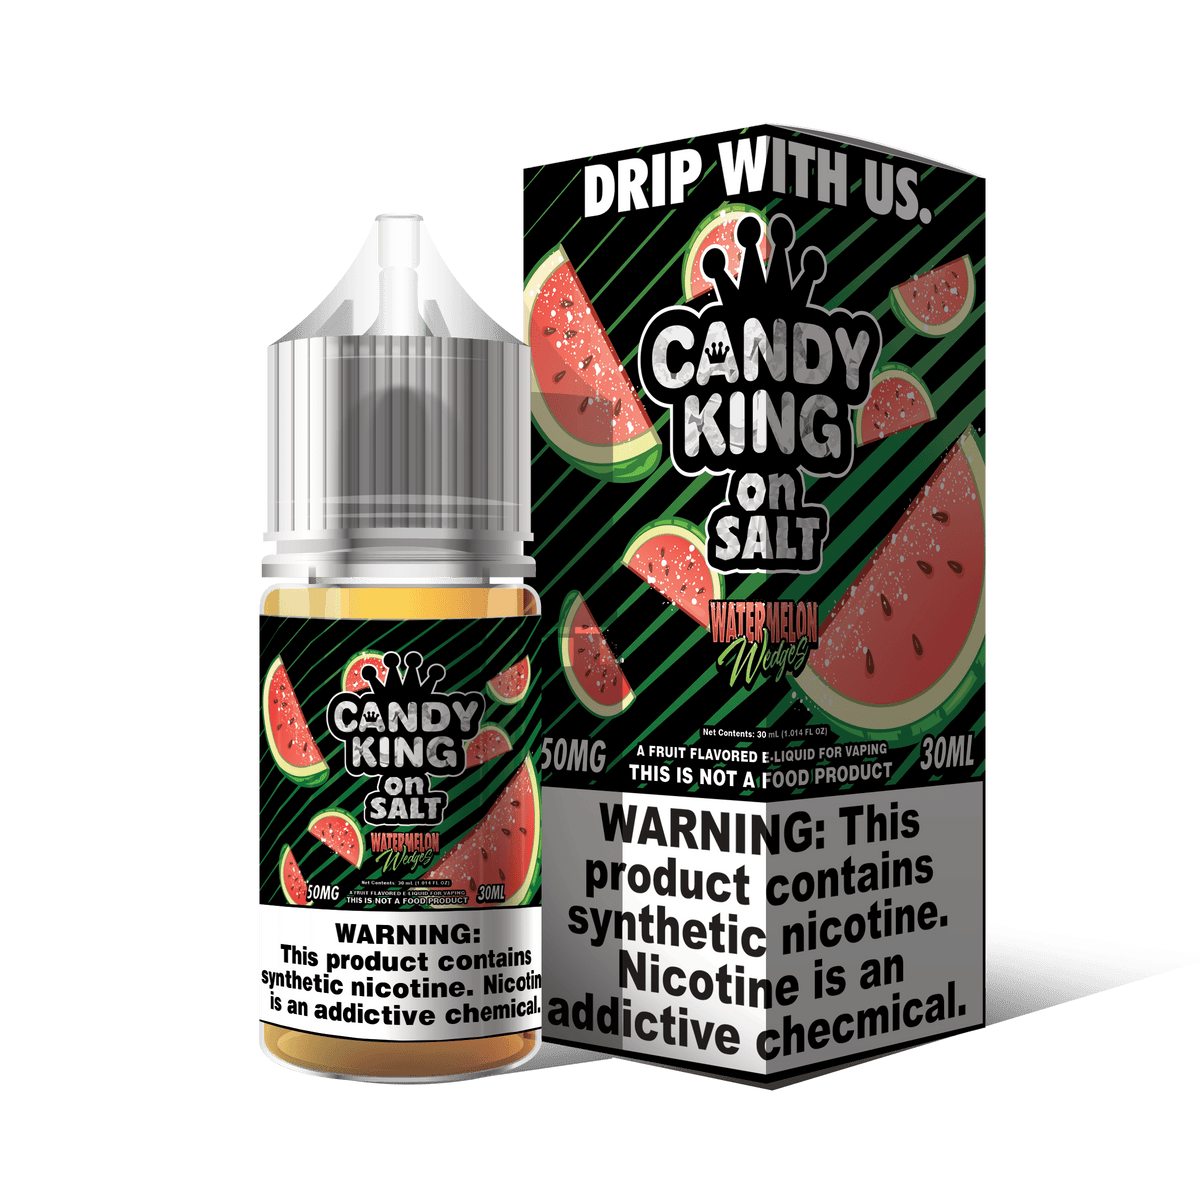 Candy King Juice Candy King On Salt Watermelon Wedges Synthetic Nicotine 30ml Nic Salt Vape Juice